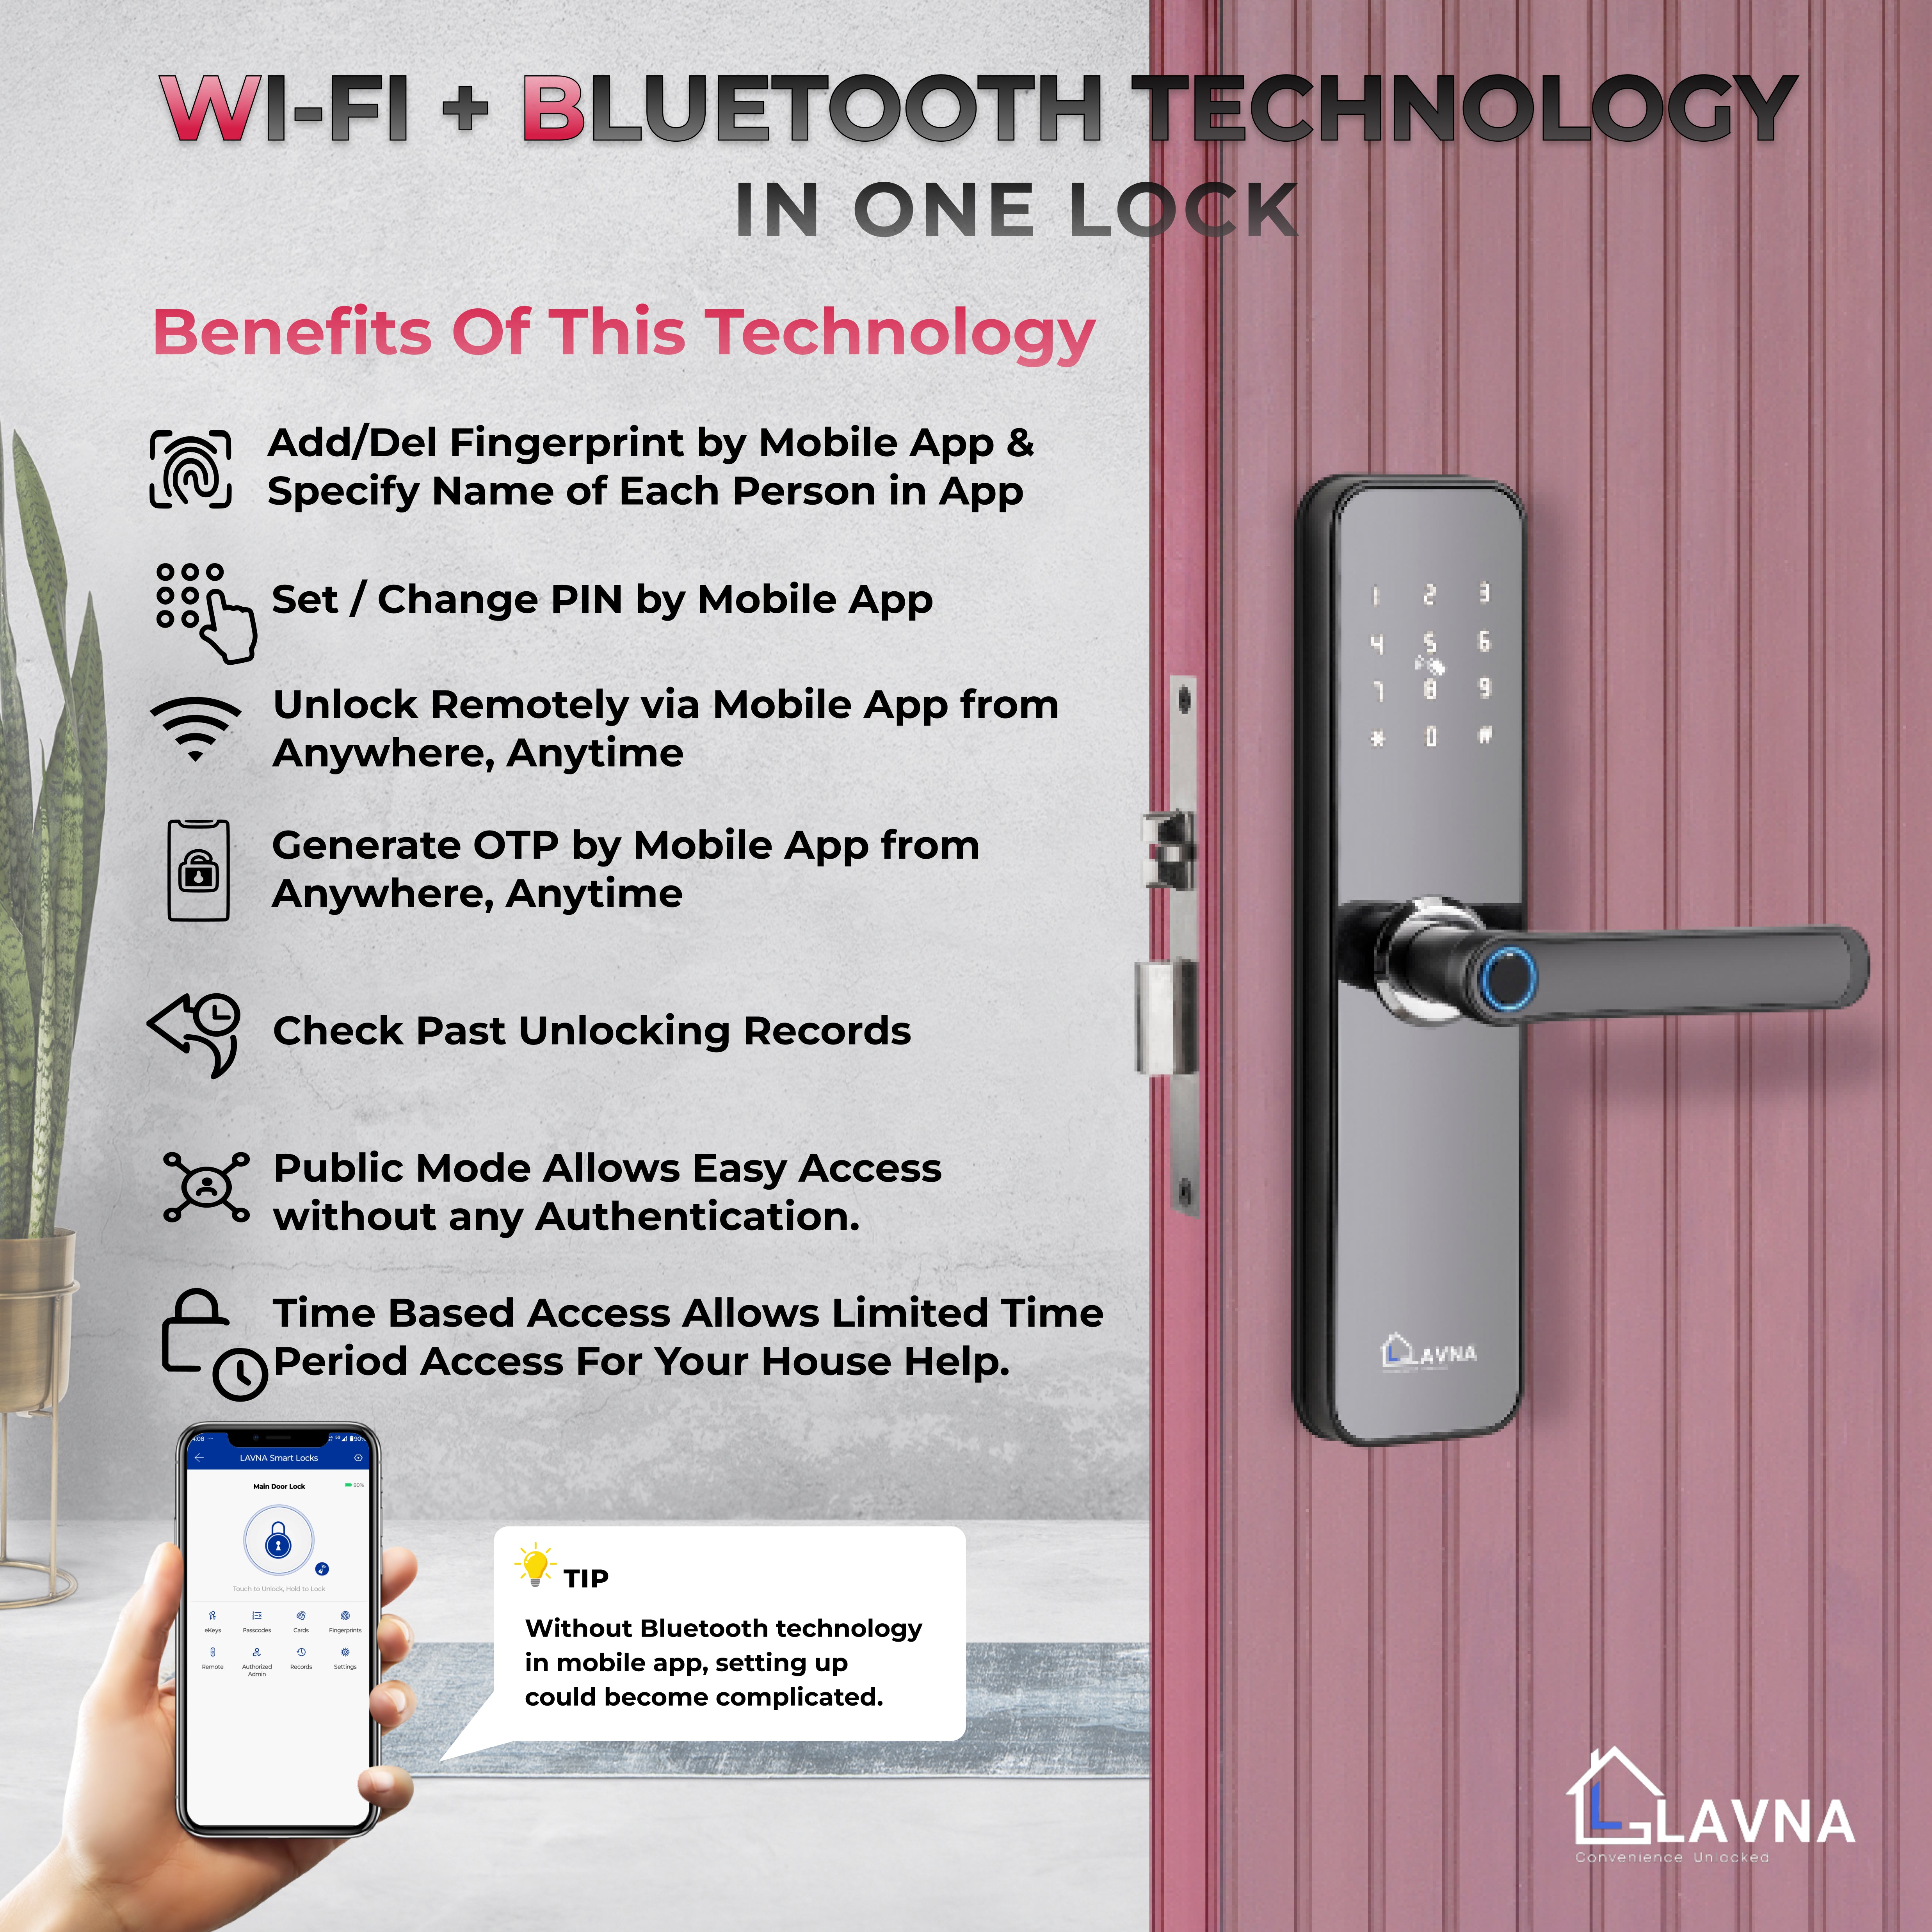 LAVNA LA28 Smart Door Lock with Wi-fi Mobile App, Fingerprint, OTP, PIN, RFID Card & Manual Key 7 way Access for Wooden Doors